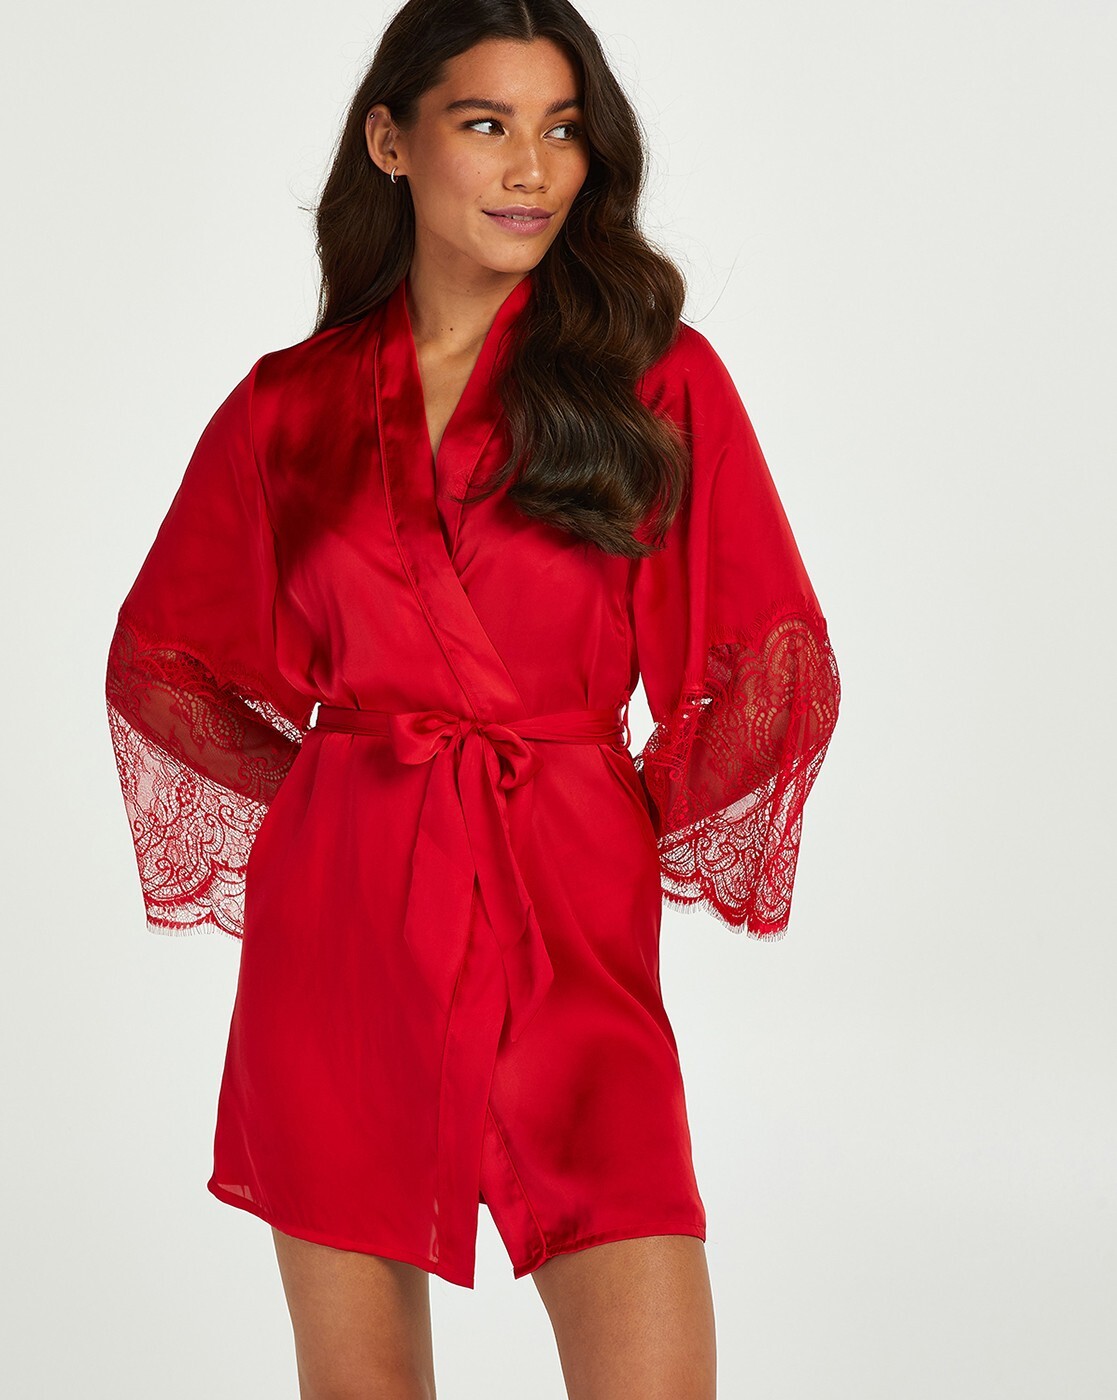 Mesh Lace Chiffon Kimono for €9 - All Nightwear - Hunkemöller